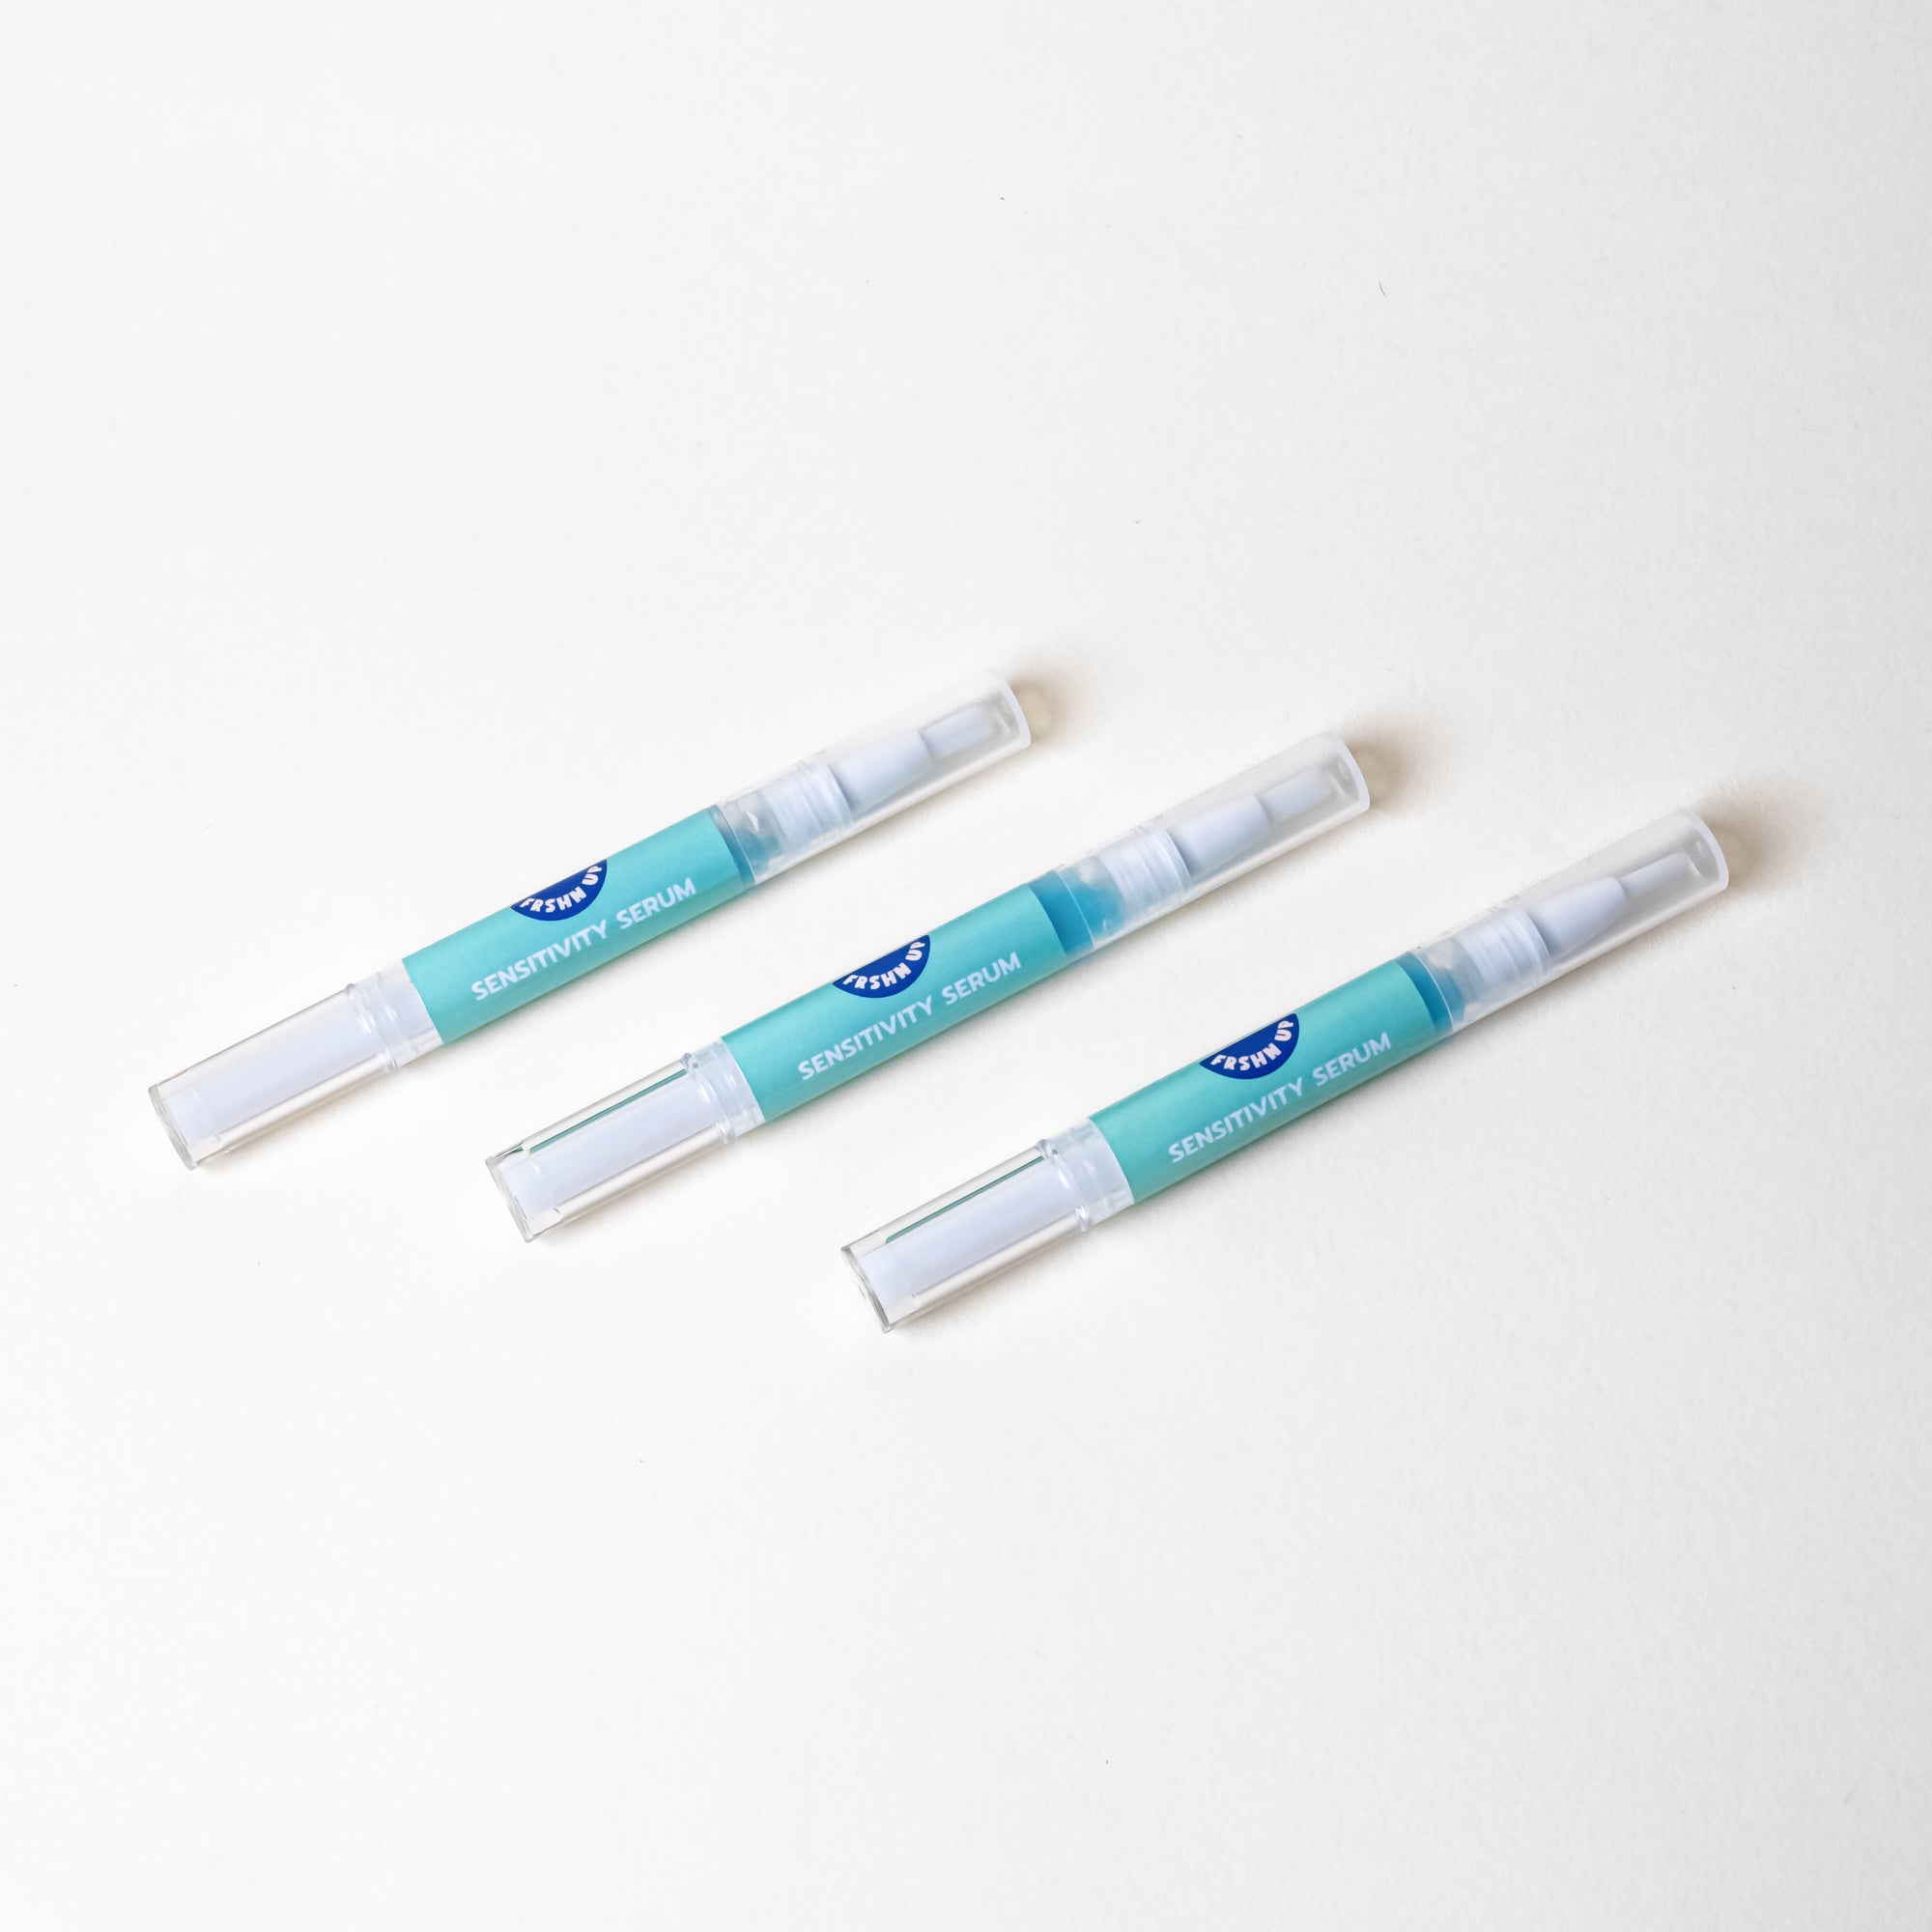 Three FRSHN UP Sensitivity Serum pens on a white surface.